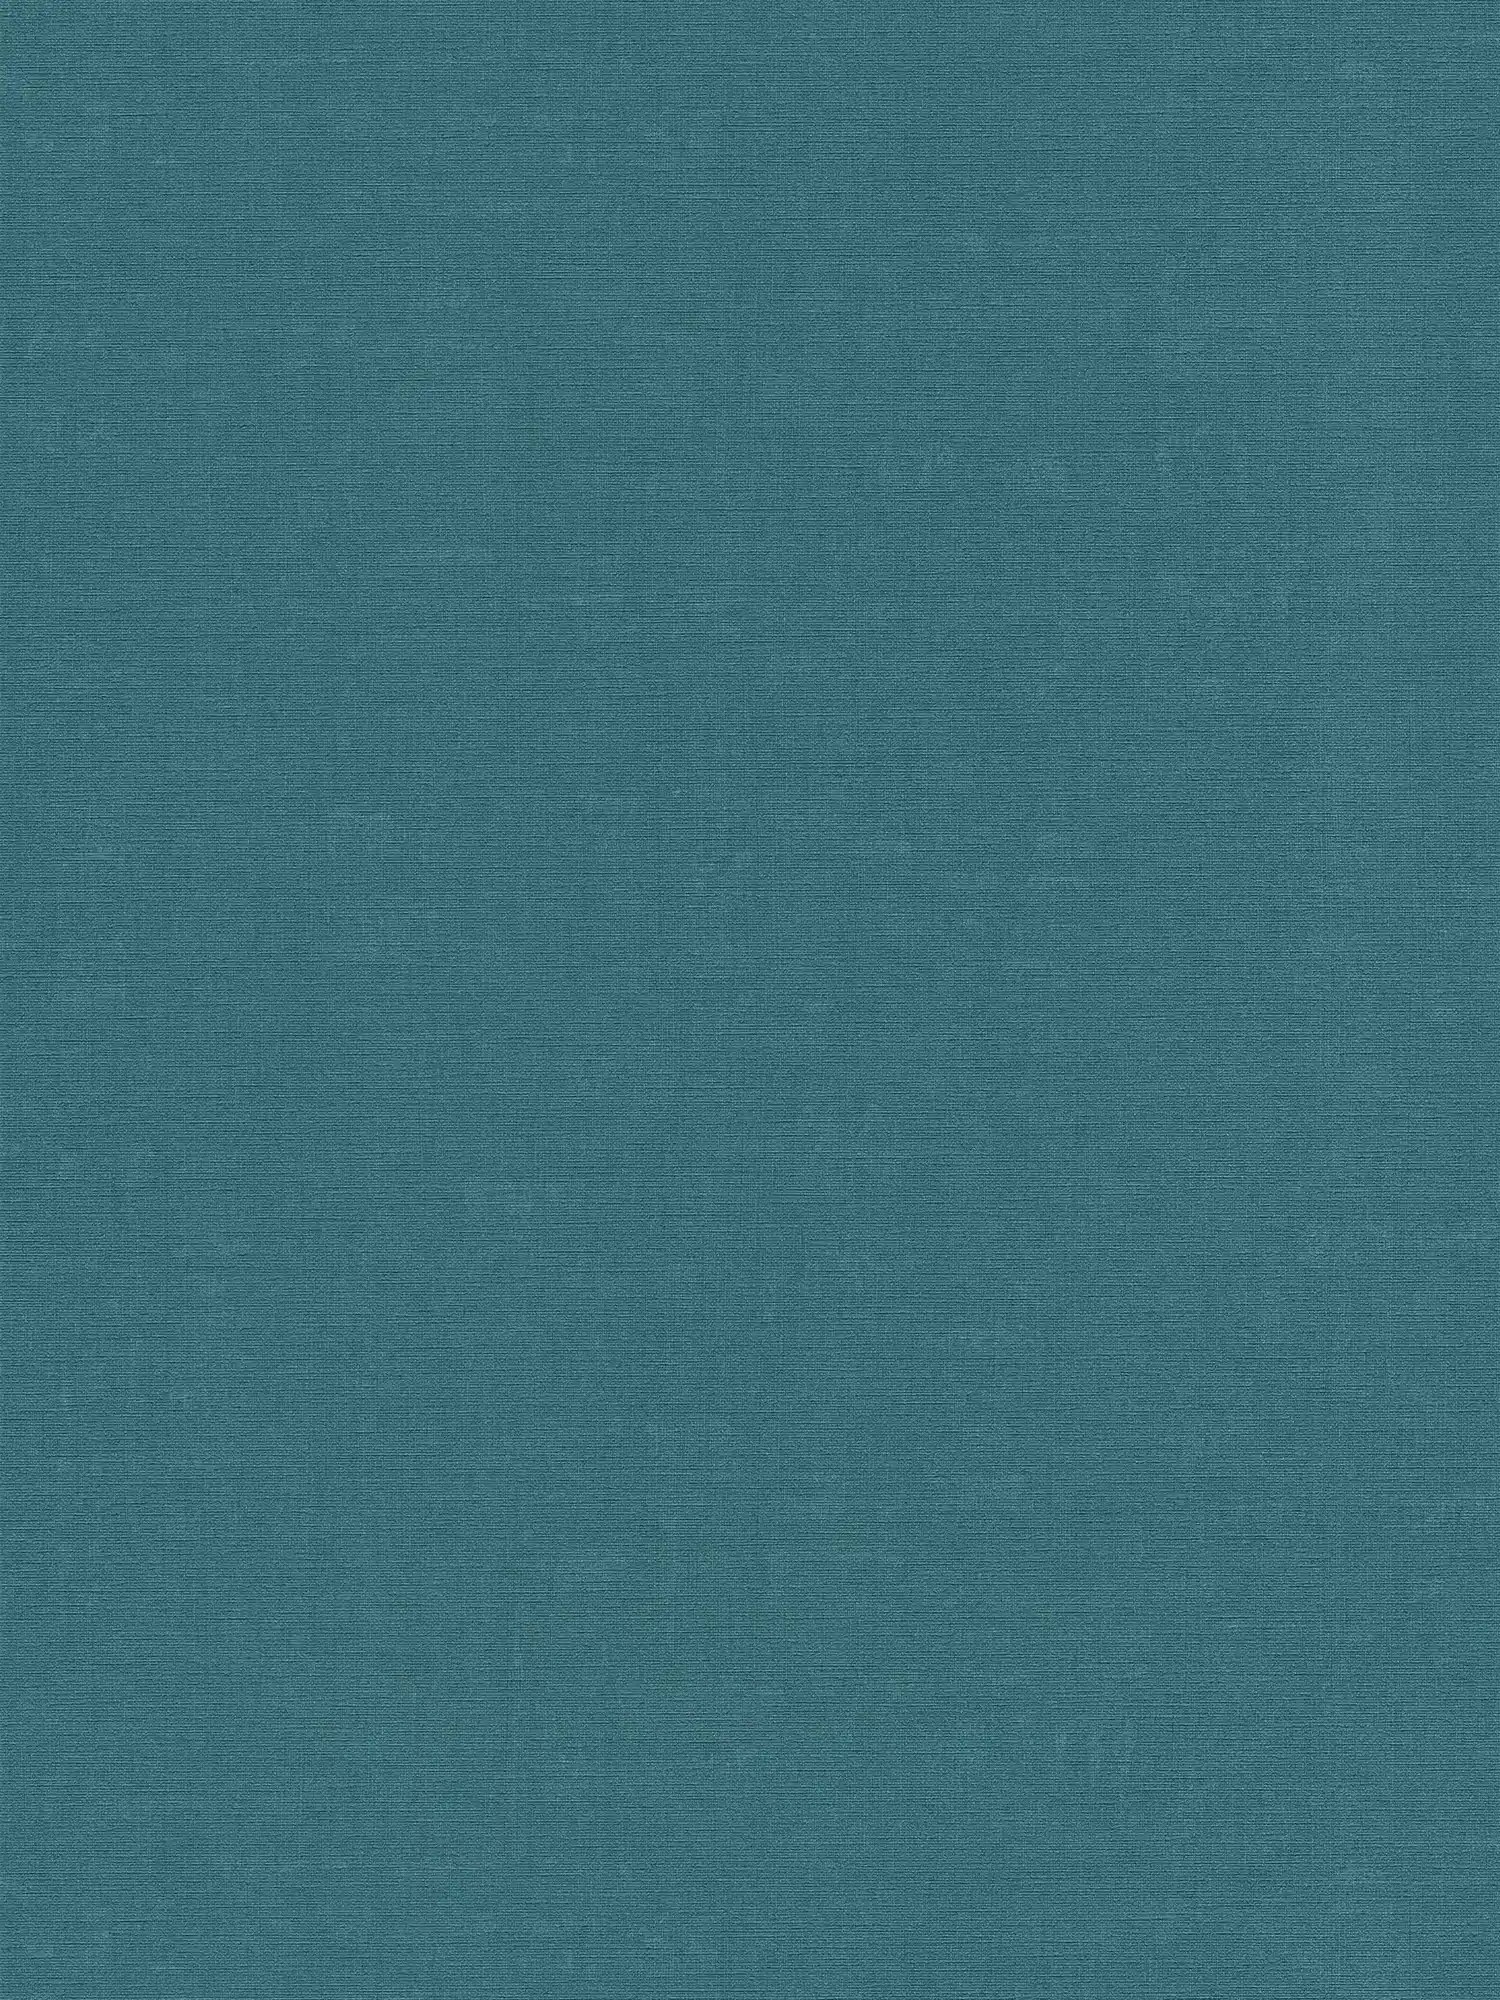 Papel pintado no tejido liso con efecto moteado - azul, verde
